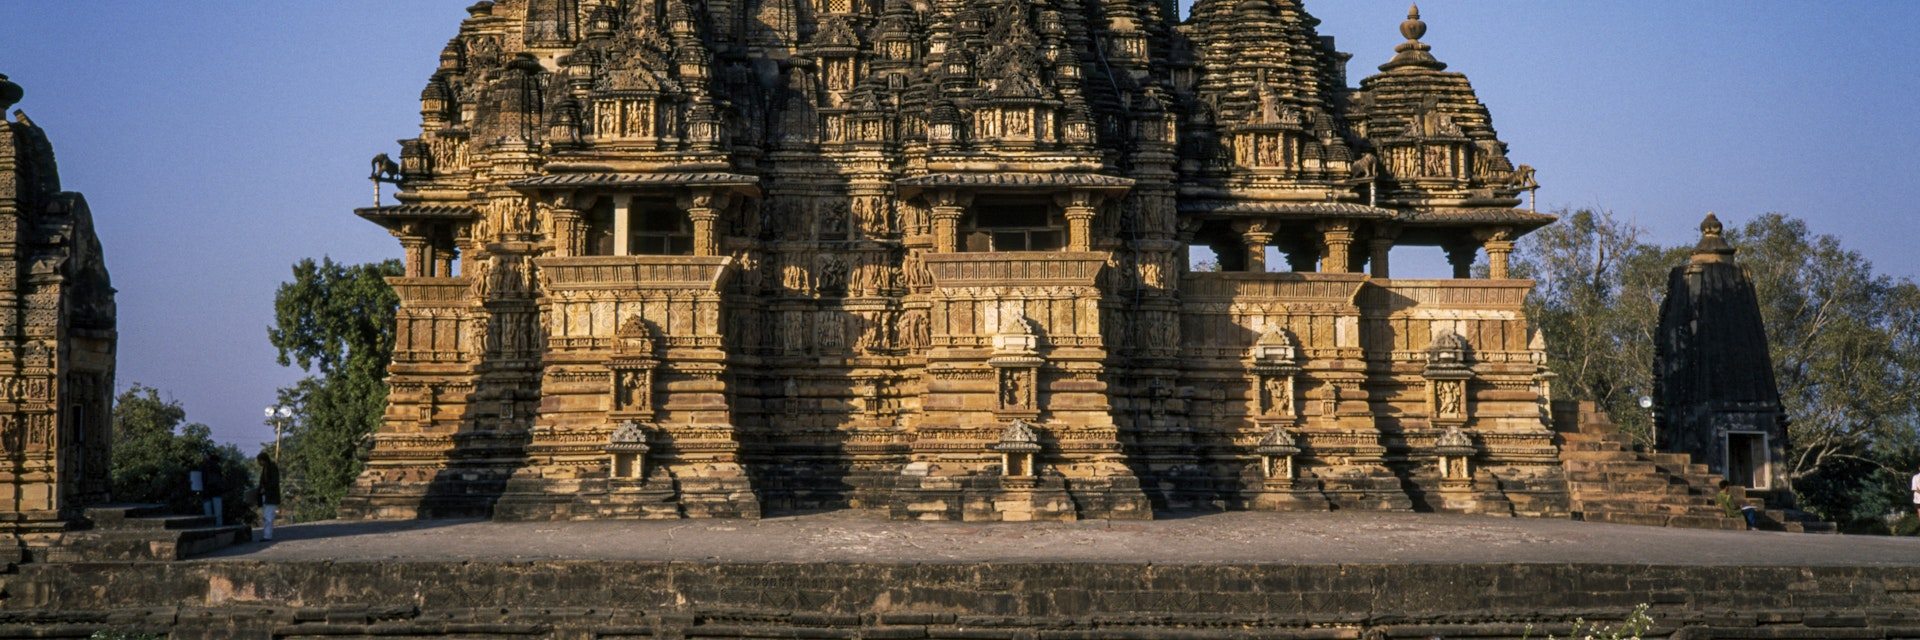 India, Madhya Pradesh, Khajuraho, Vishvanath Temple dating from the 10th Century. (Photo by: Eye Ubiquitous/Universal Images Group via Getty Images)